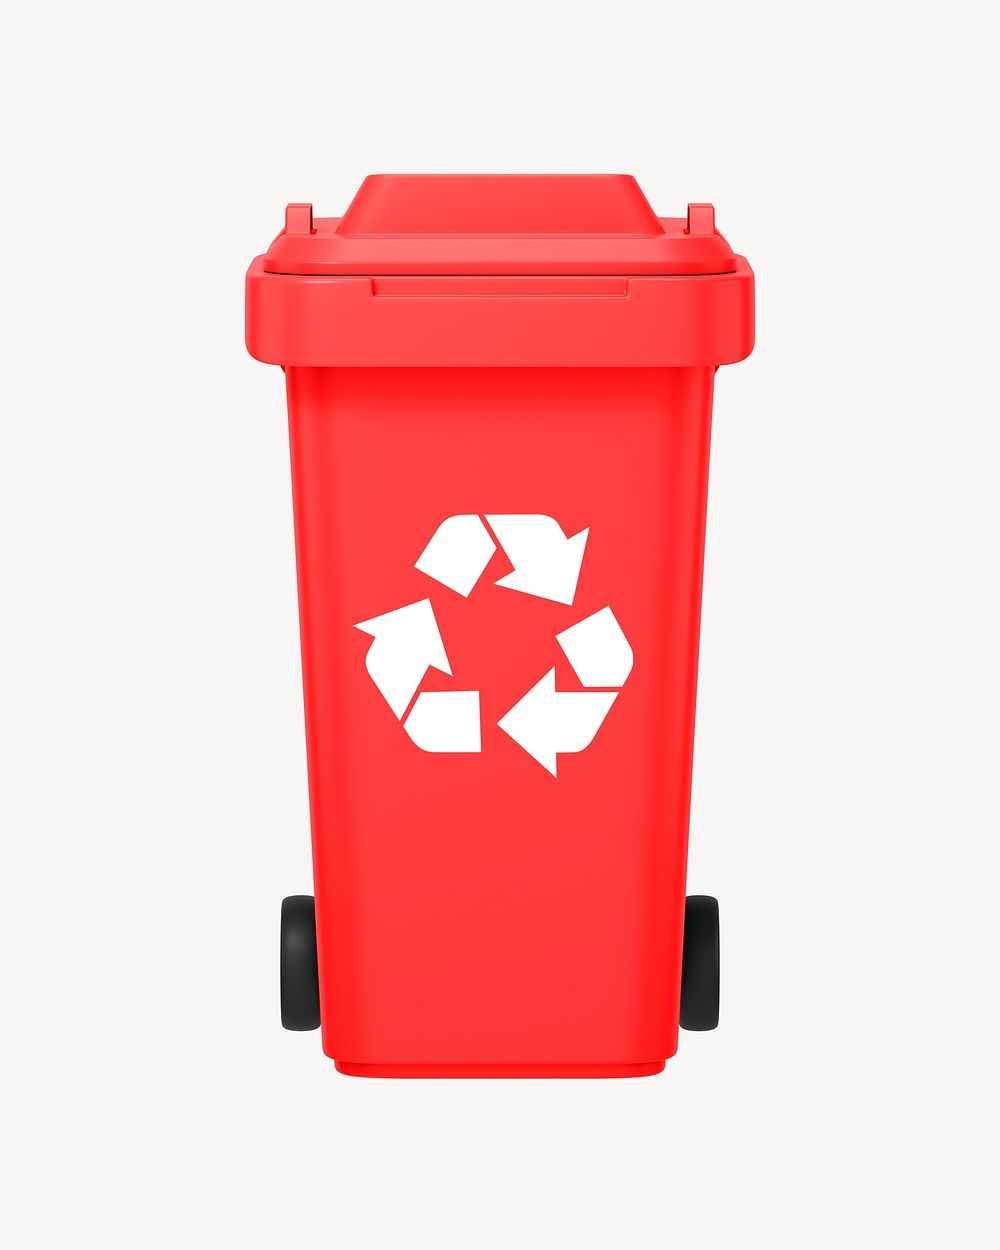 3D recycling bin, element illustration